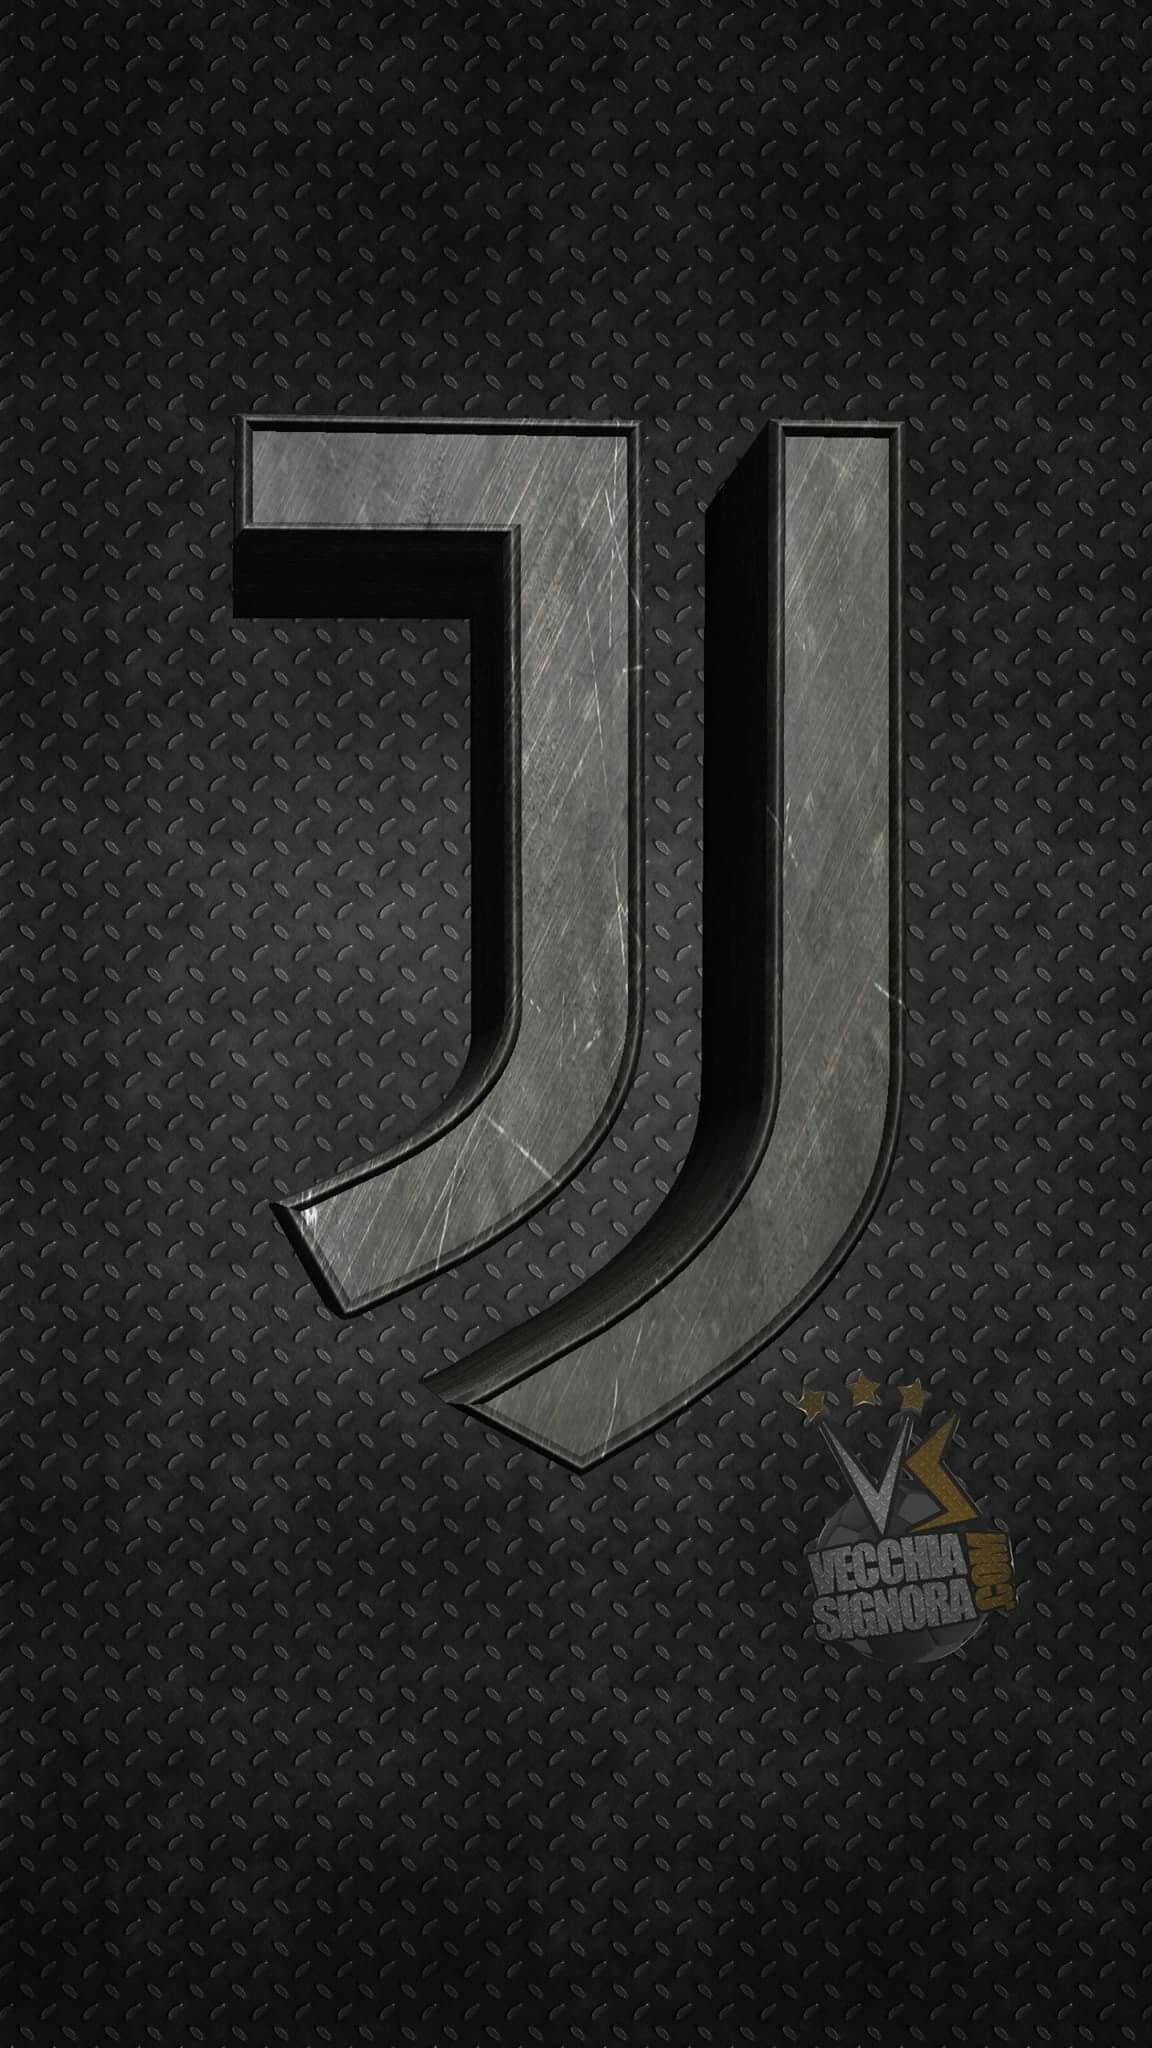 1152x2048 Mobile phone wallpaper inspired by Juventus FC rd kit Ã